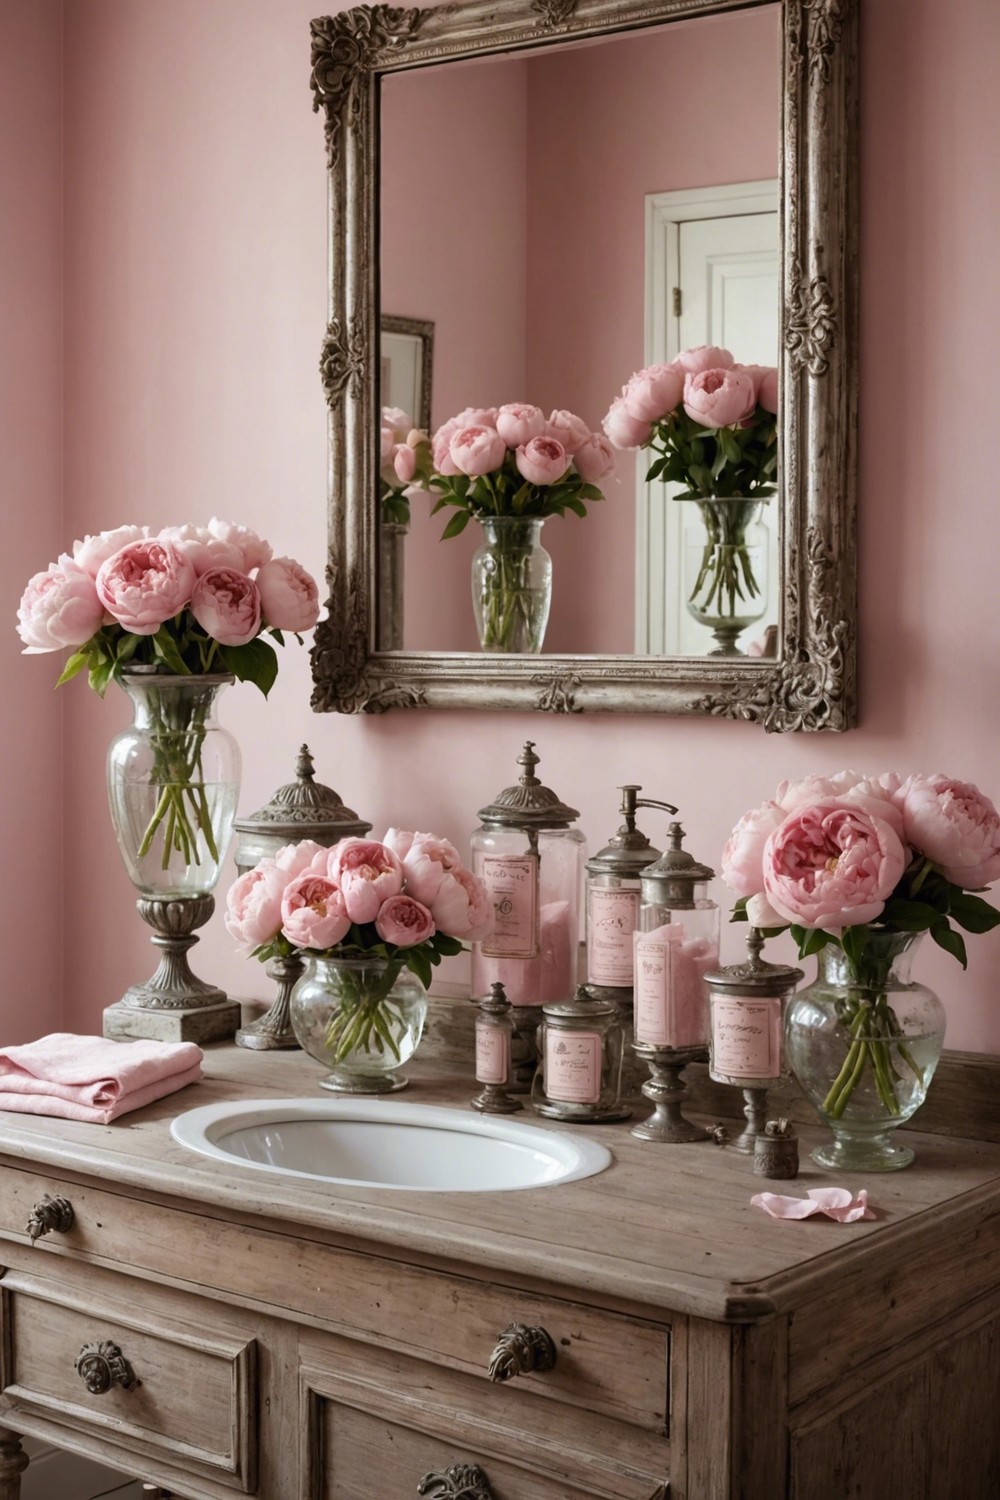 Blushing Blooms: Soft Pink Floral Arrangements